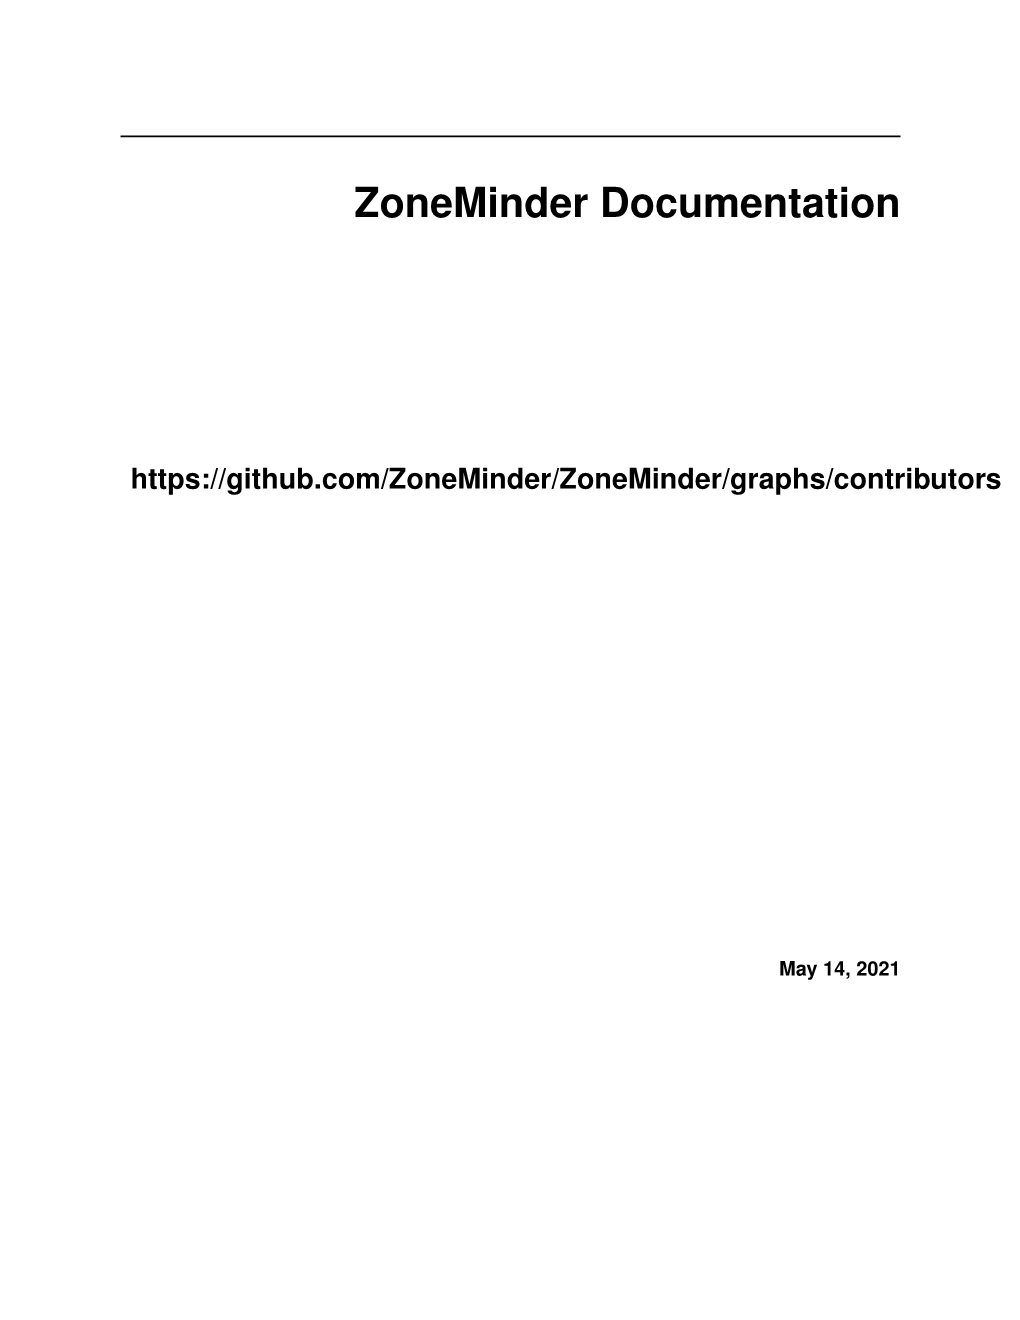 Zoneminder Documentation